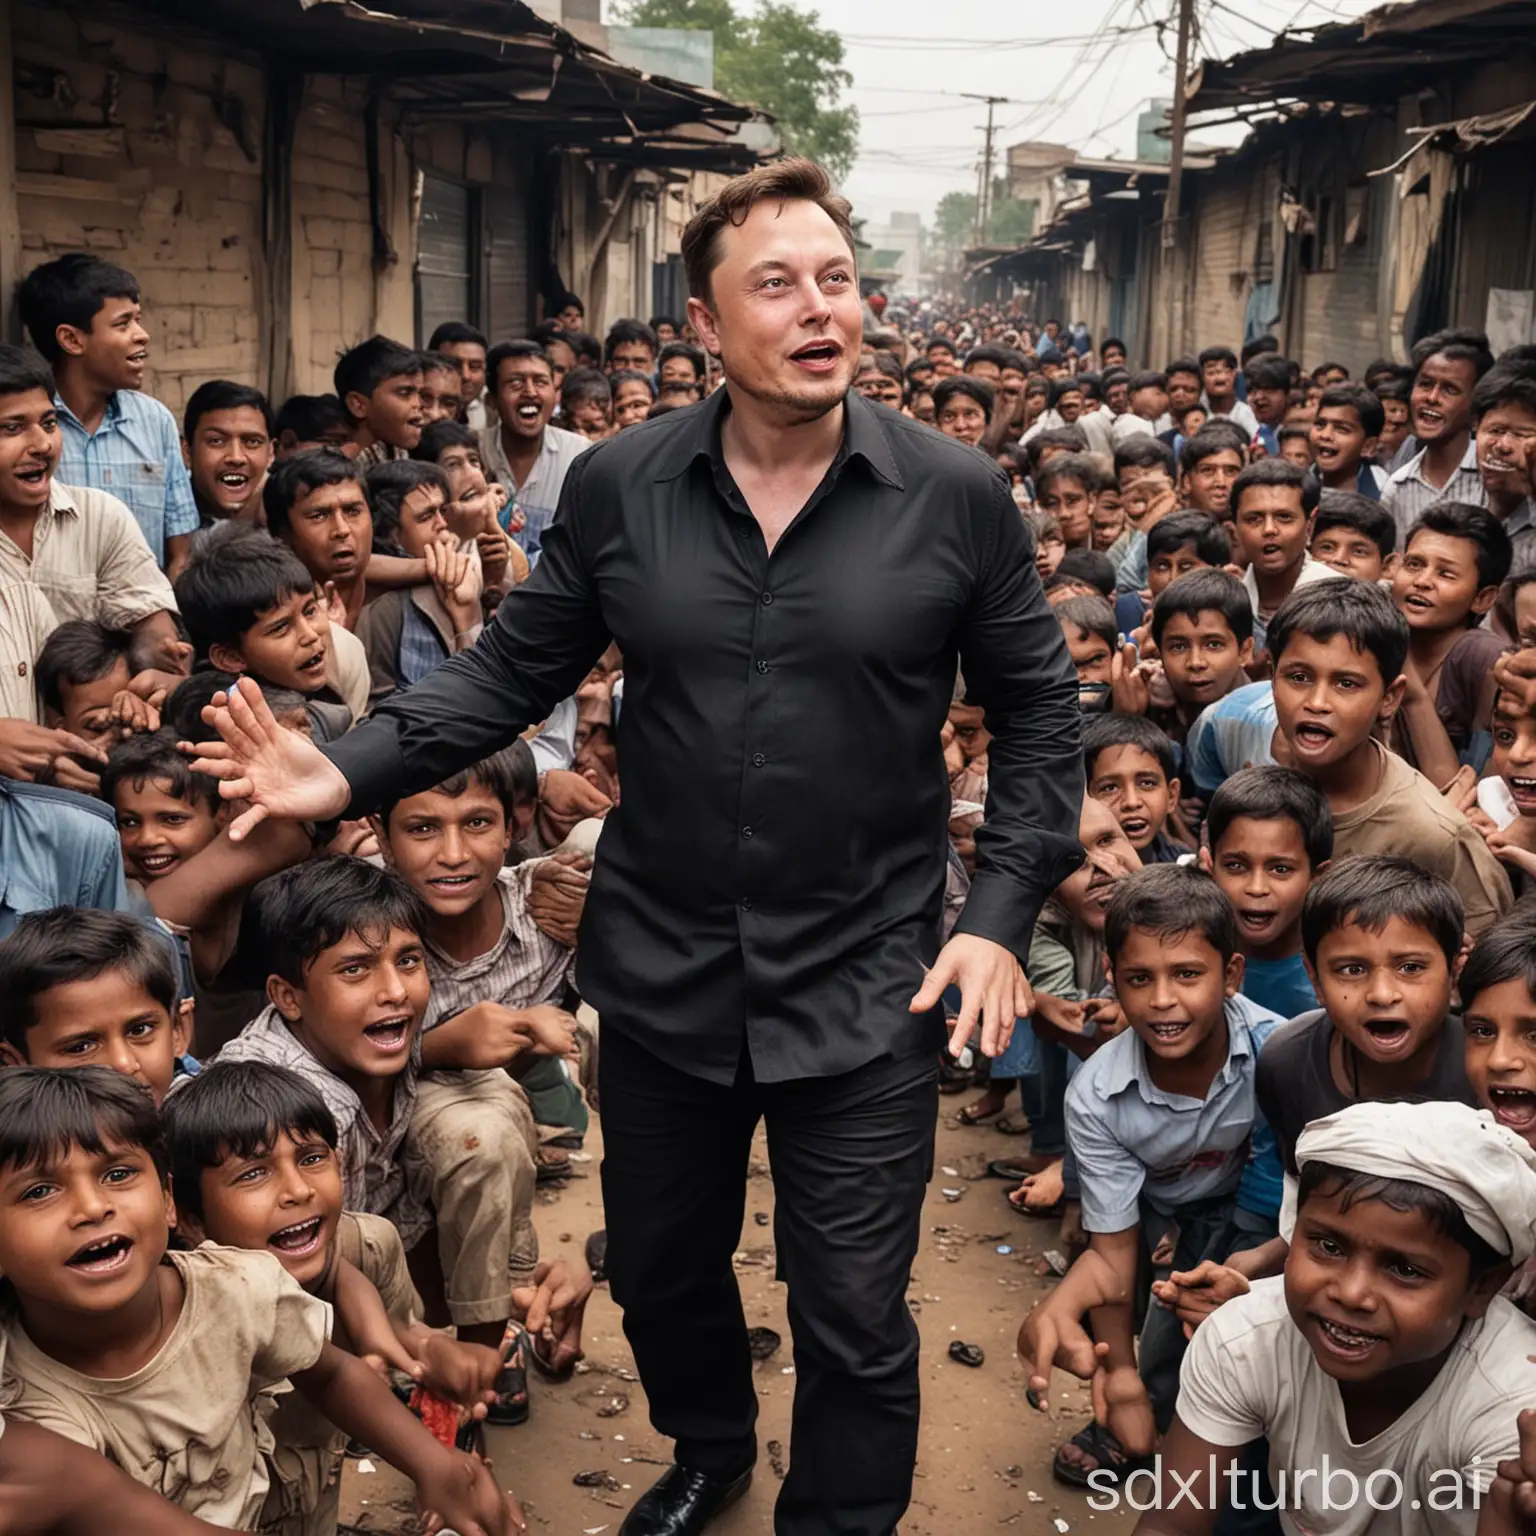 Elon-Musk-Emerges-from-Mumbai-Slums-Amidst-Tears-of-Loss